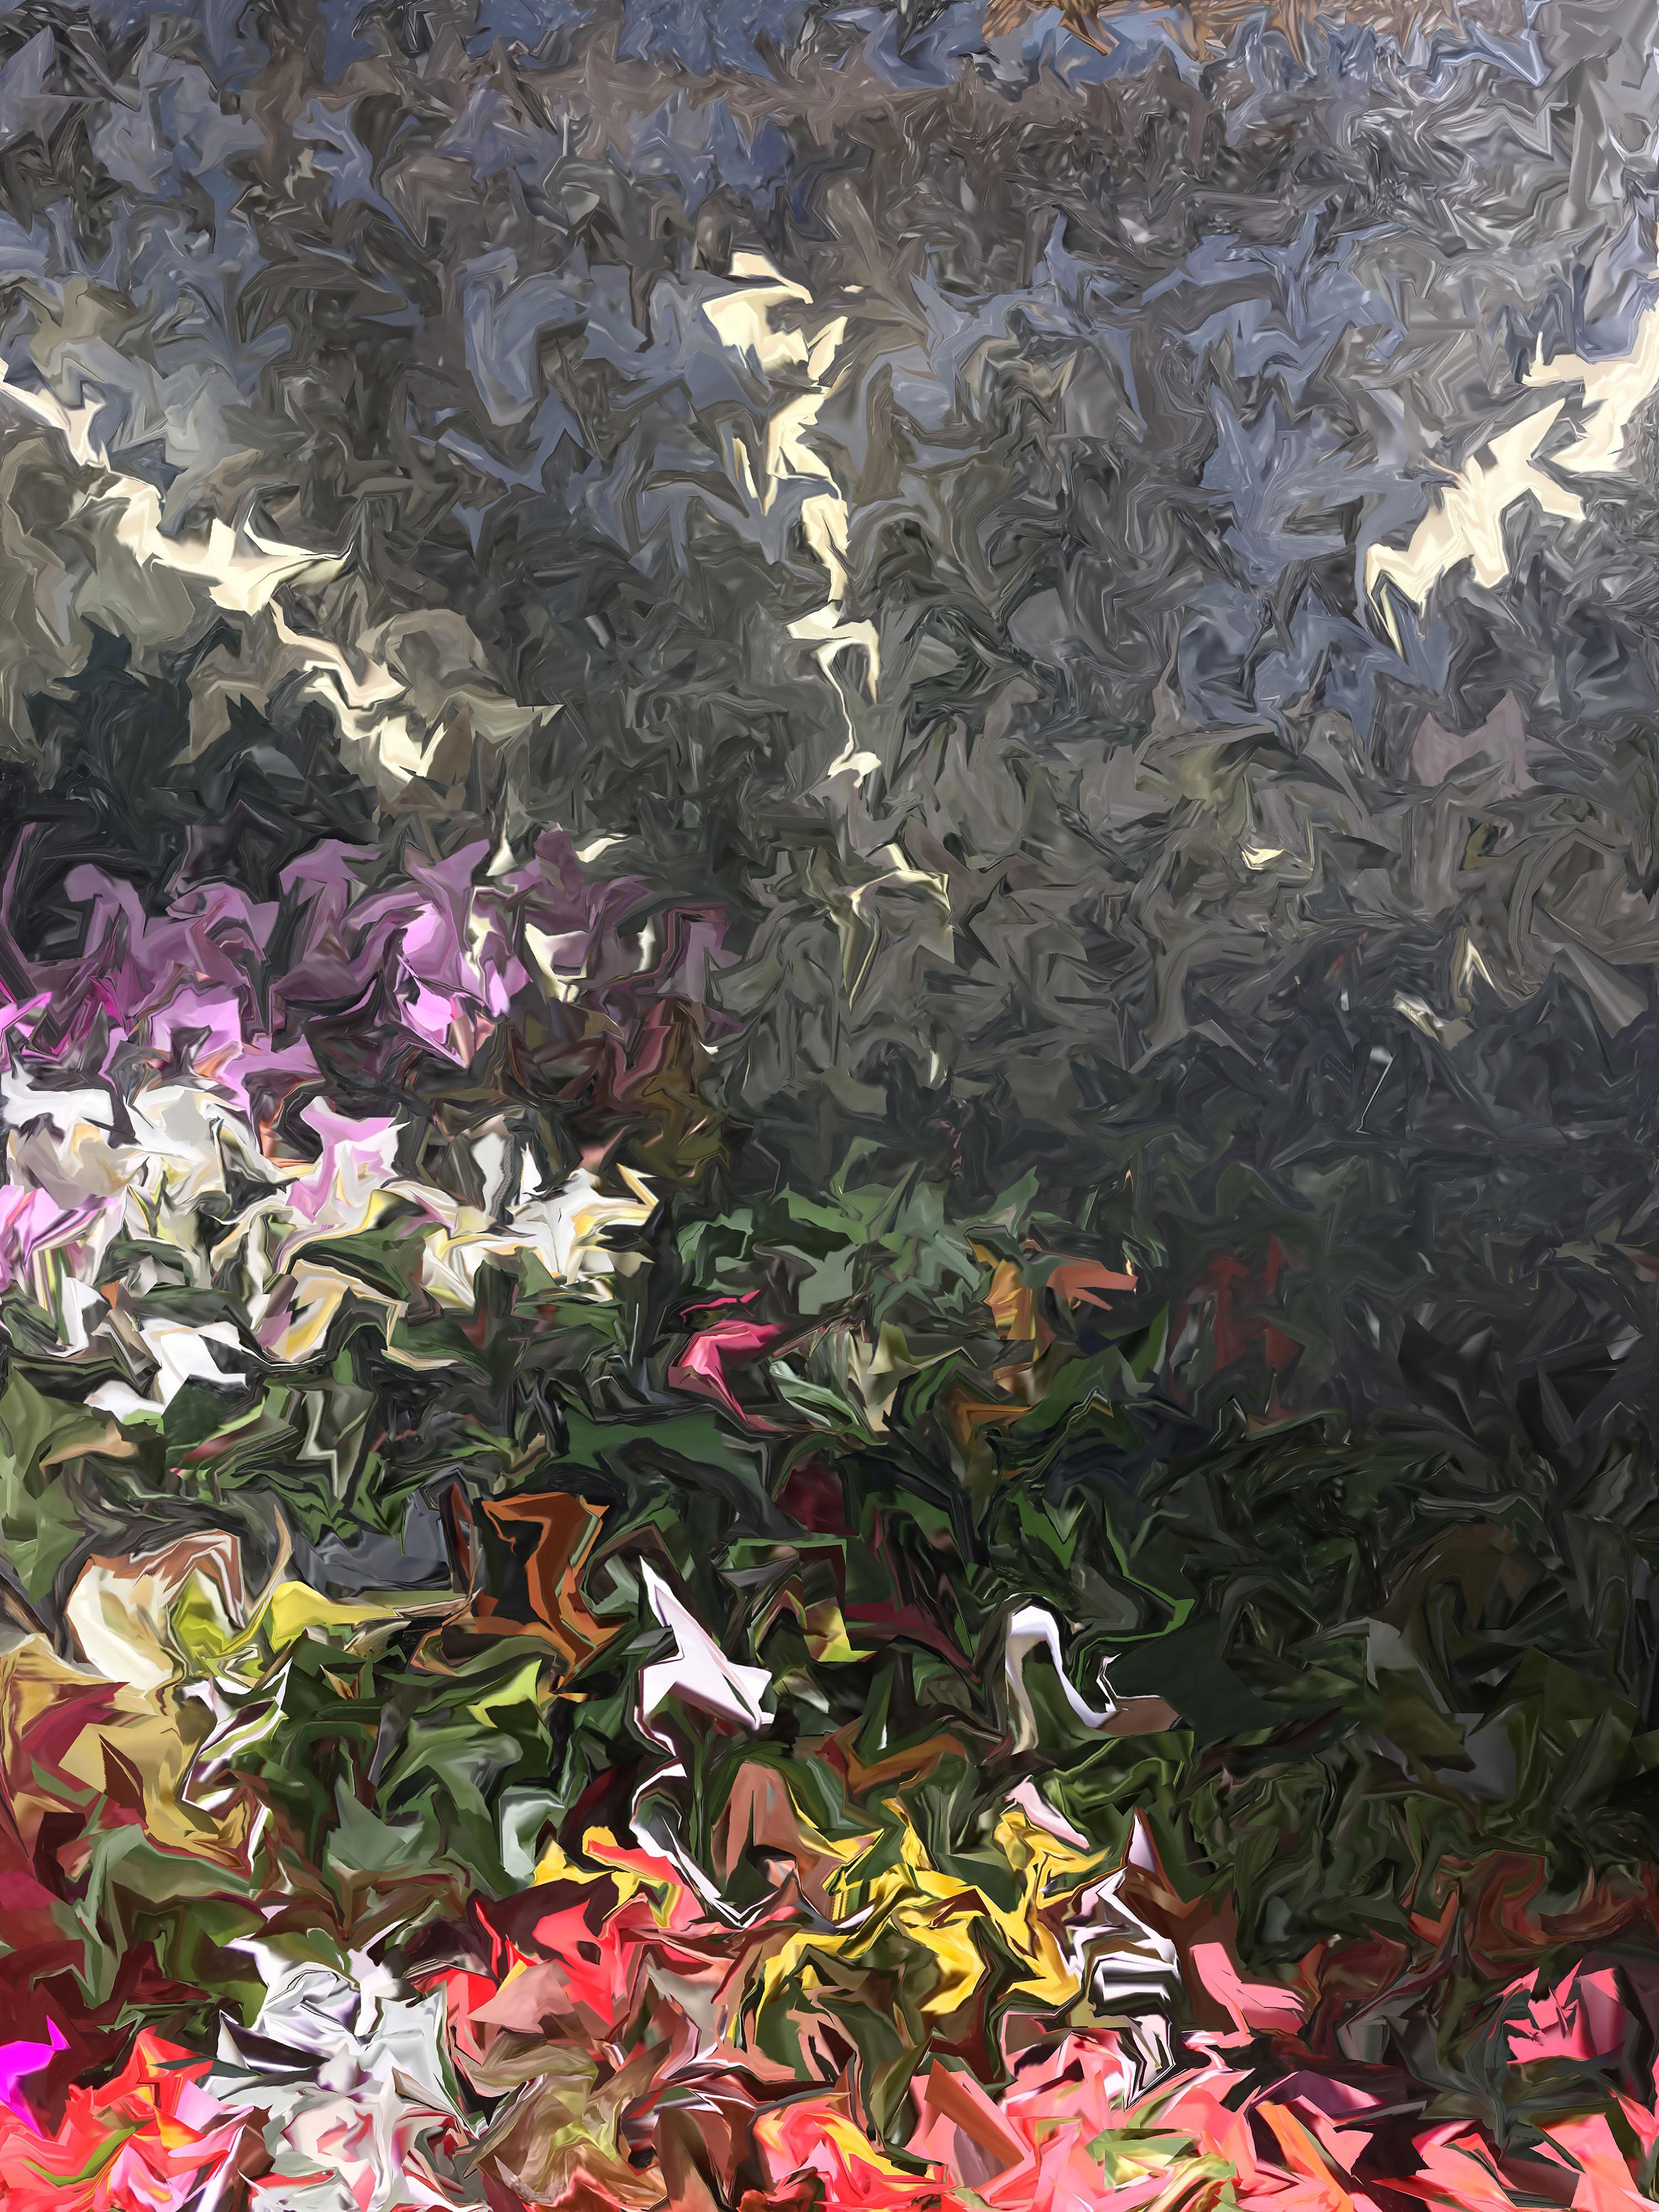 Abstract Print Gary Cruz - Begonias and Orchids, 2018, photographie manipulée numériquement, signée